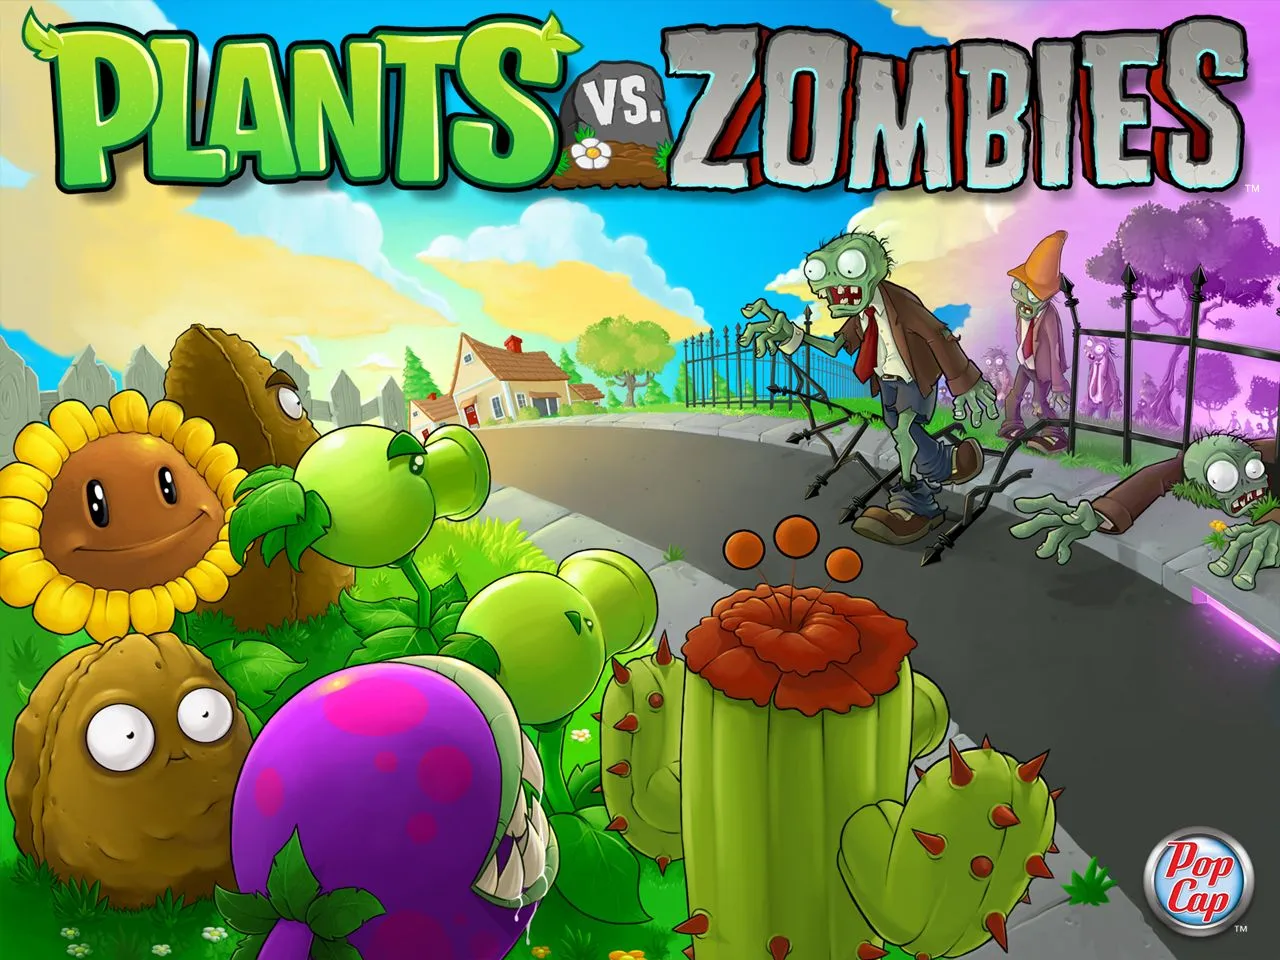 PopCap putz brains back on the menu in Plants vs. Zombies 2 ...